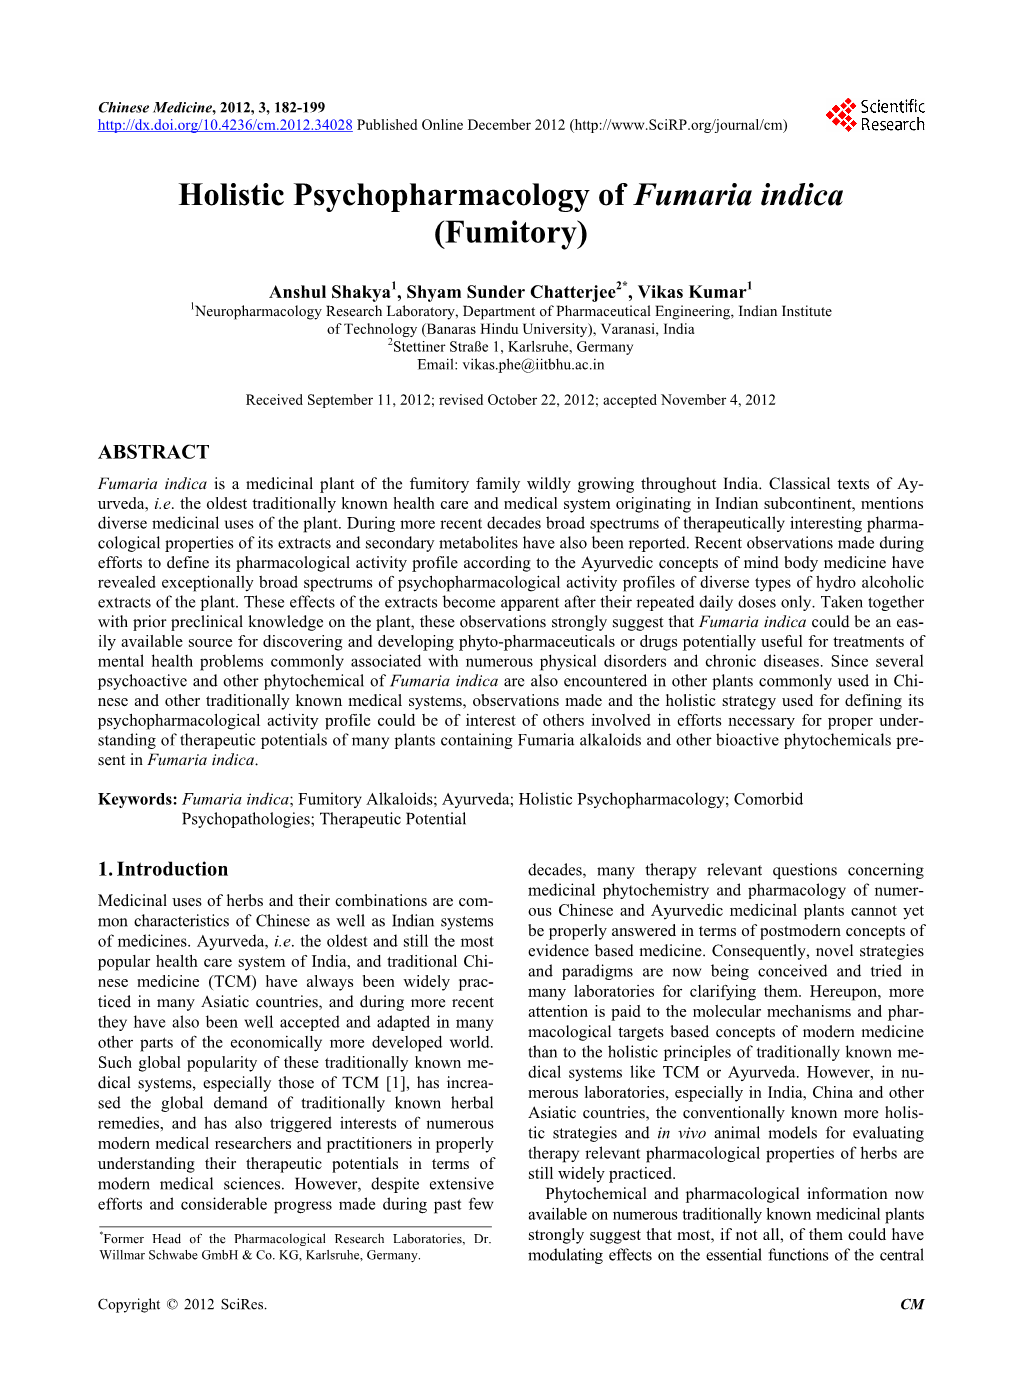 Holistic Psychopharmacology of Fumaria Indica (Fumitory)